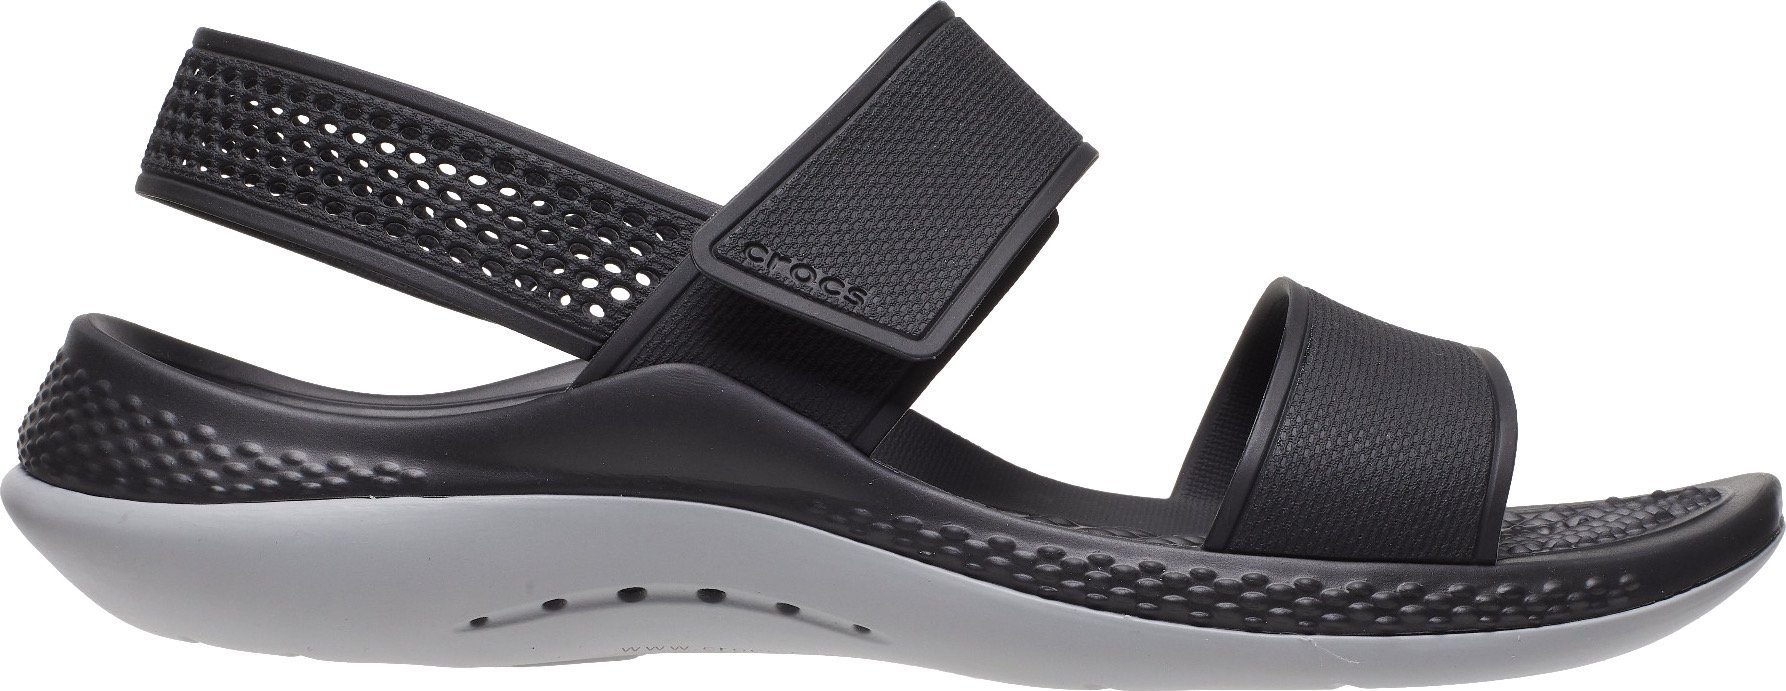 Laufsohle Sandal Crocs 360 flexibler schwarz-grau Sandale mit LiteRide